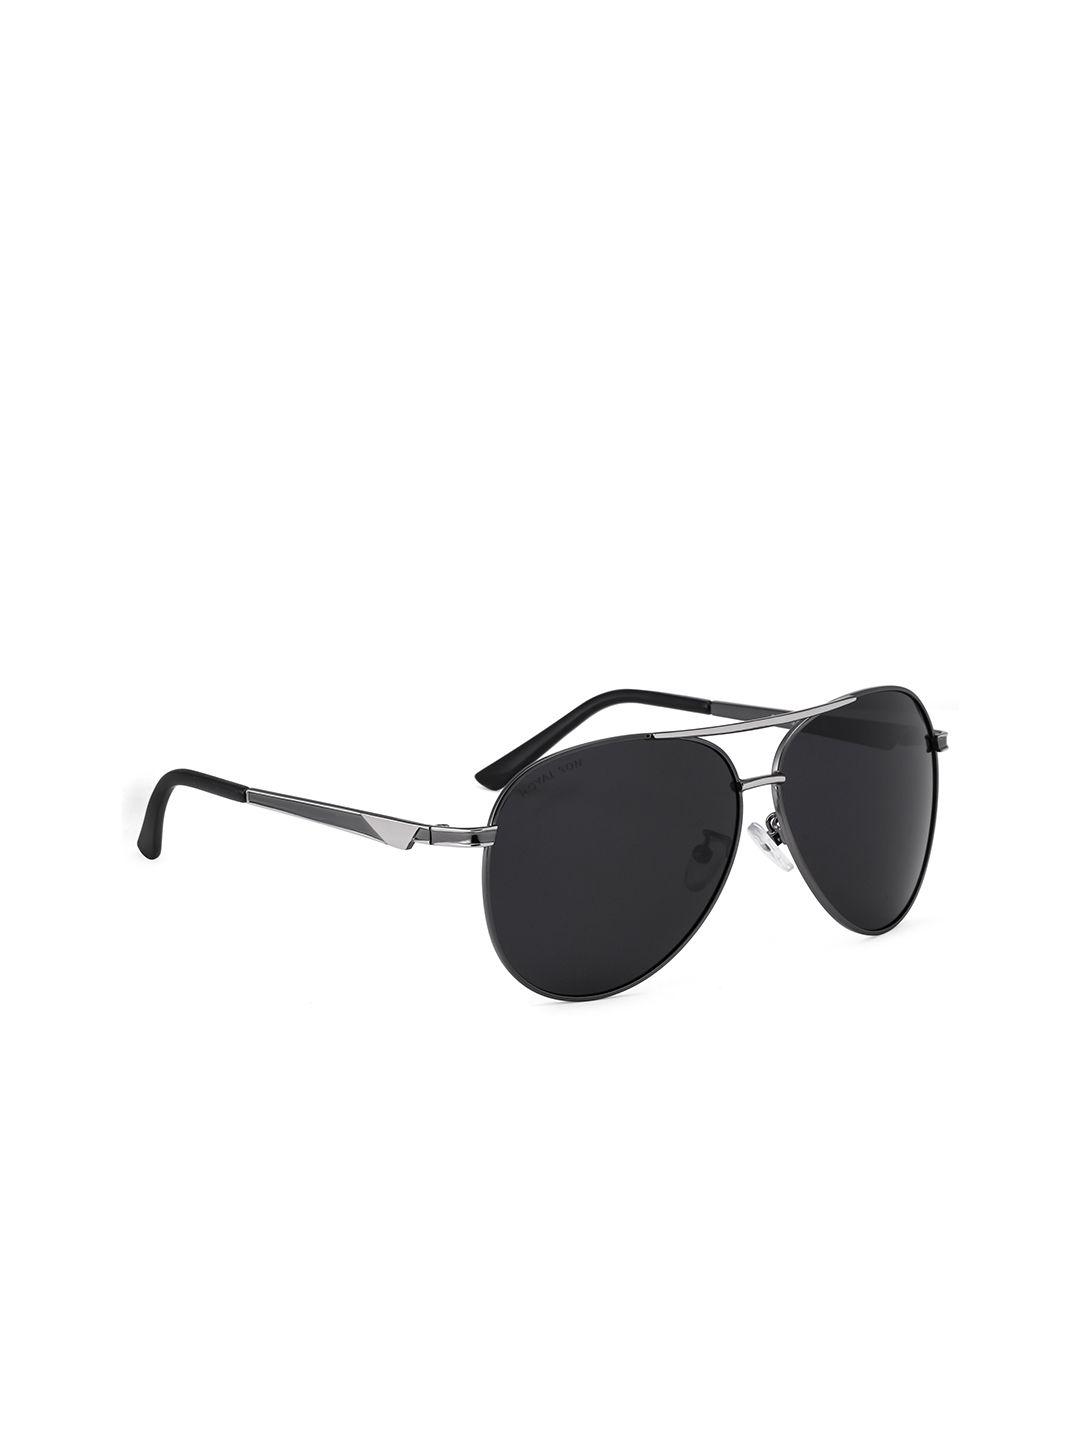 royal son unisex black lens & aviator sunglasses with polarised lens chi0081-c1-r1